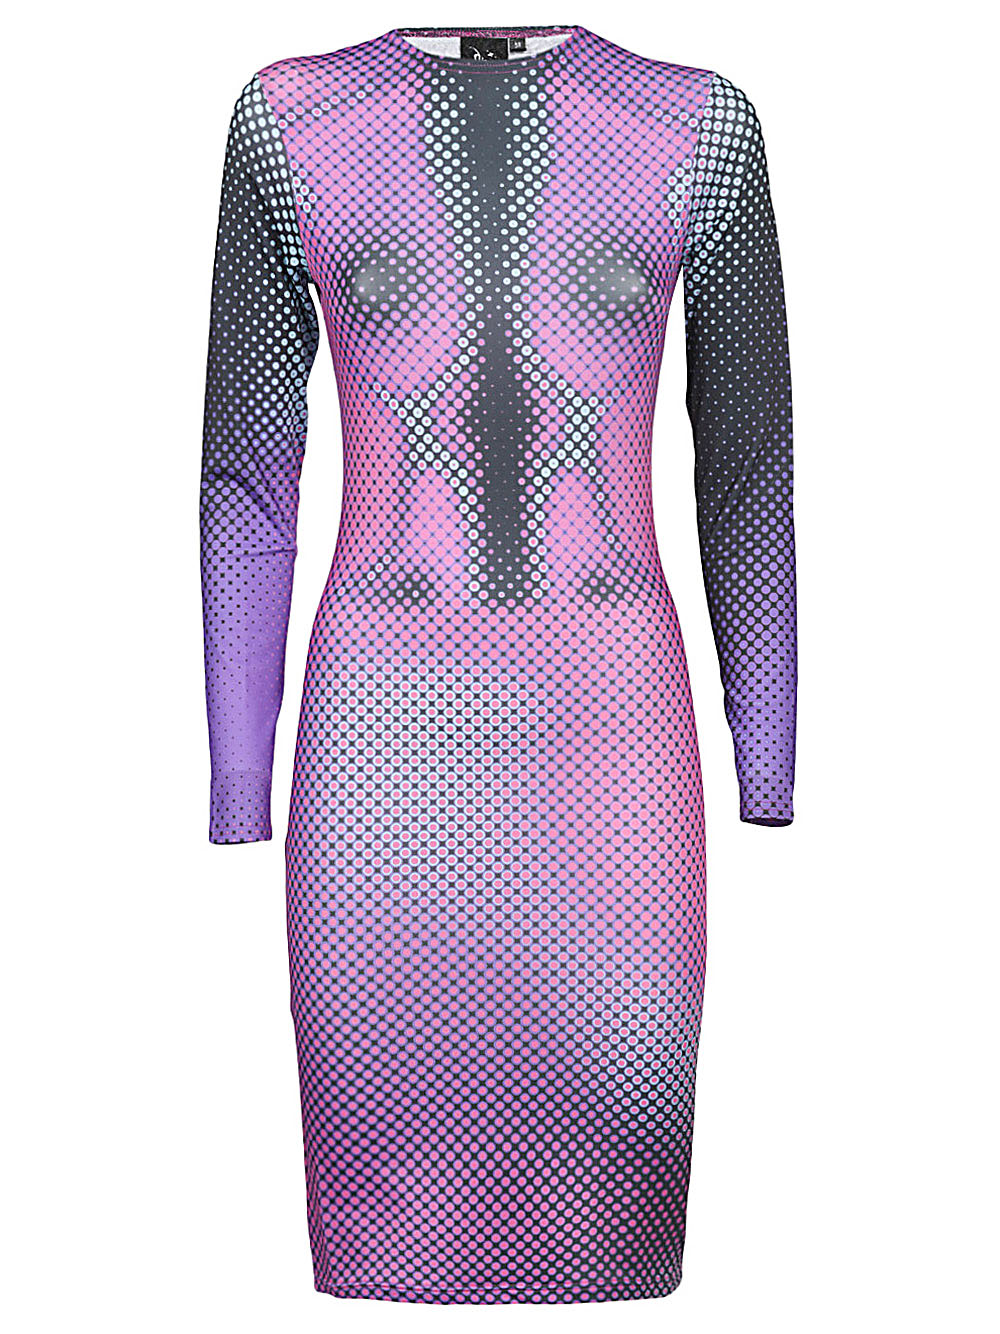 Sinead gorey SINEAD GOREY- Digitally Print Fitted Short Dress